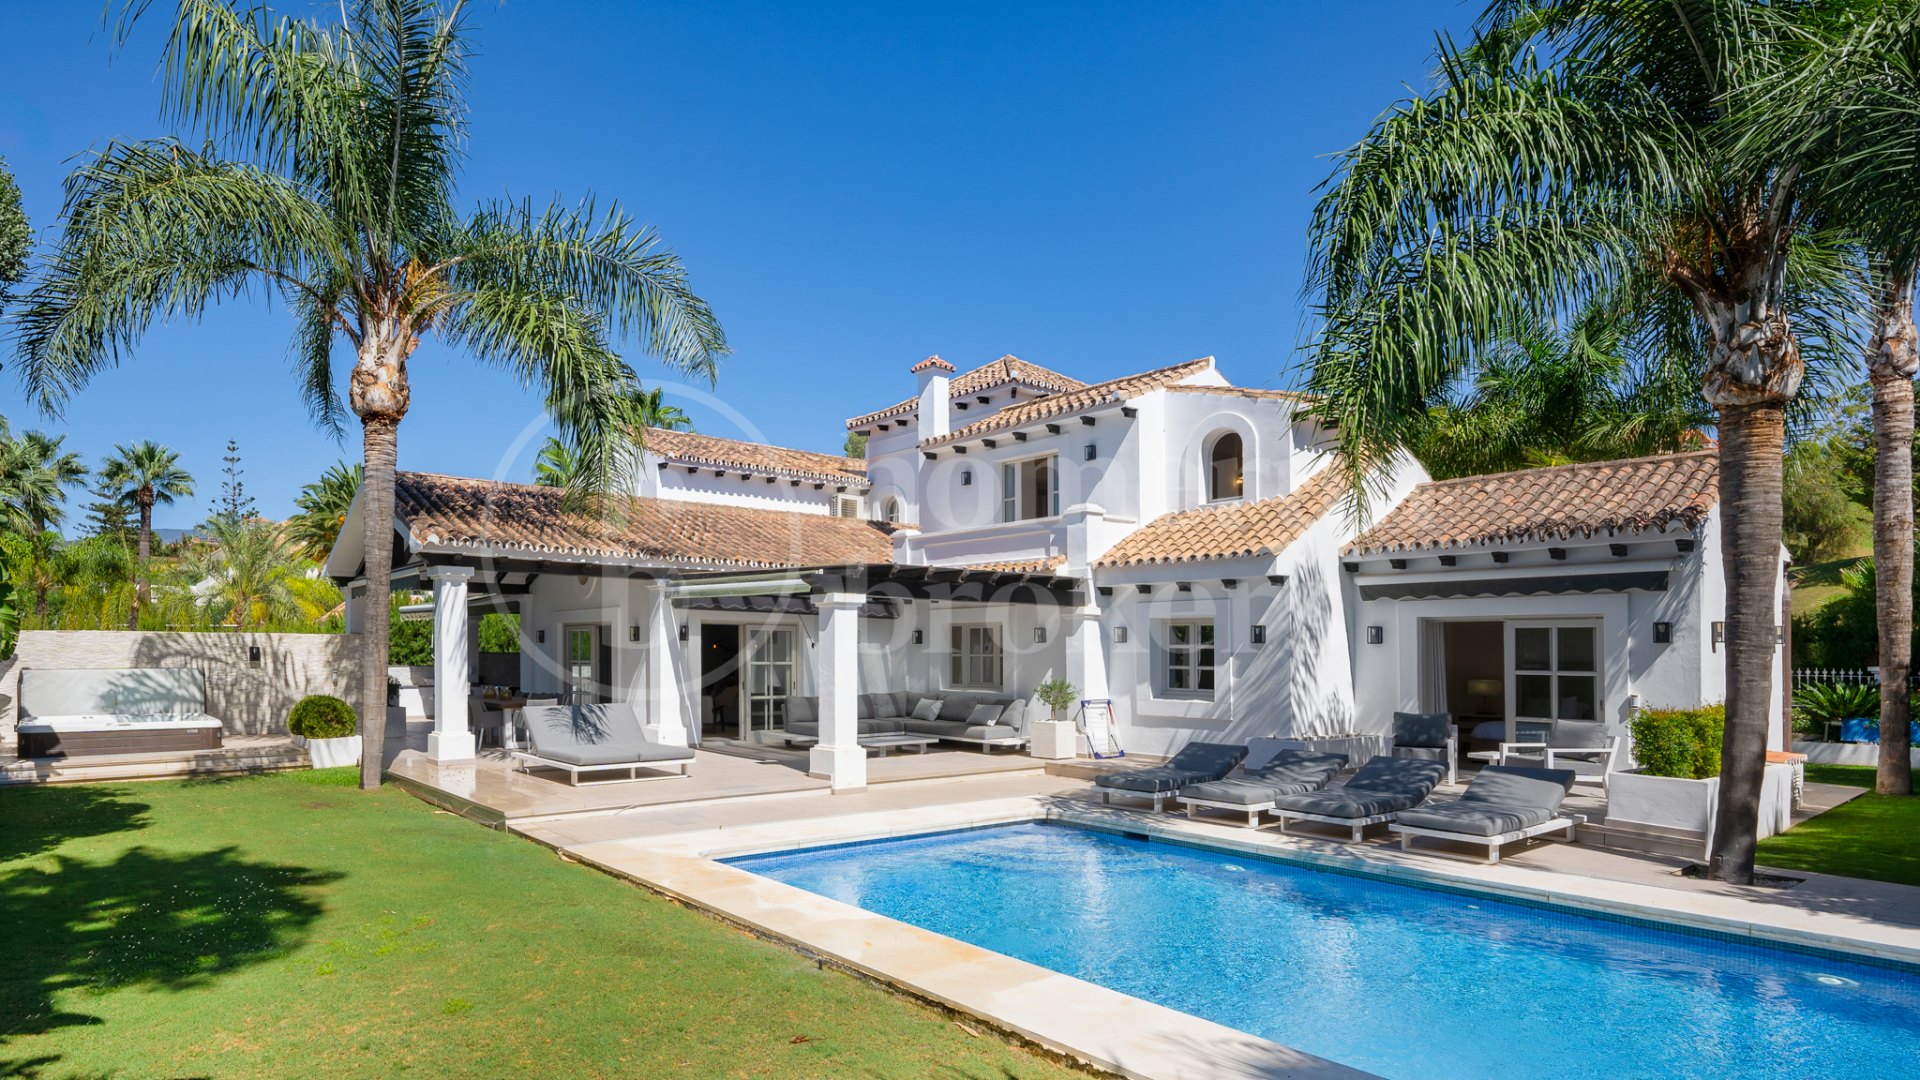 Villa Elegante - Luxury Villa in Prime Location